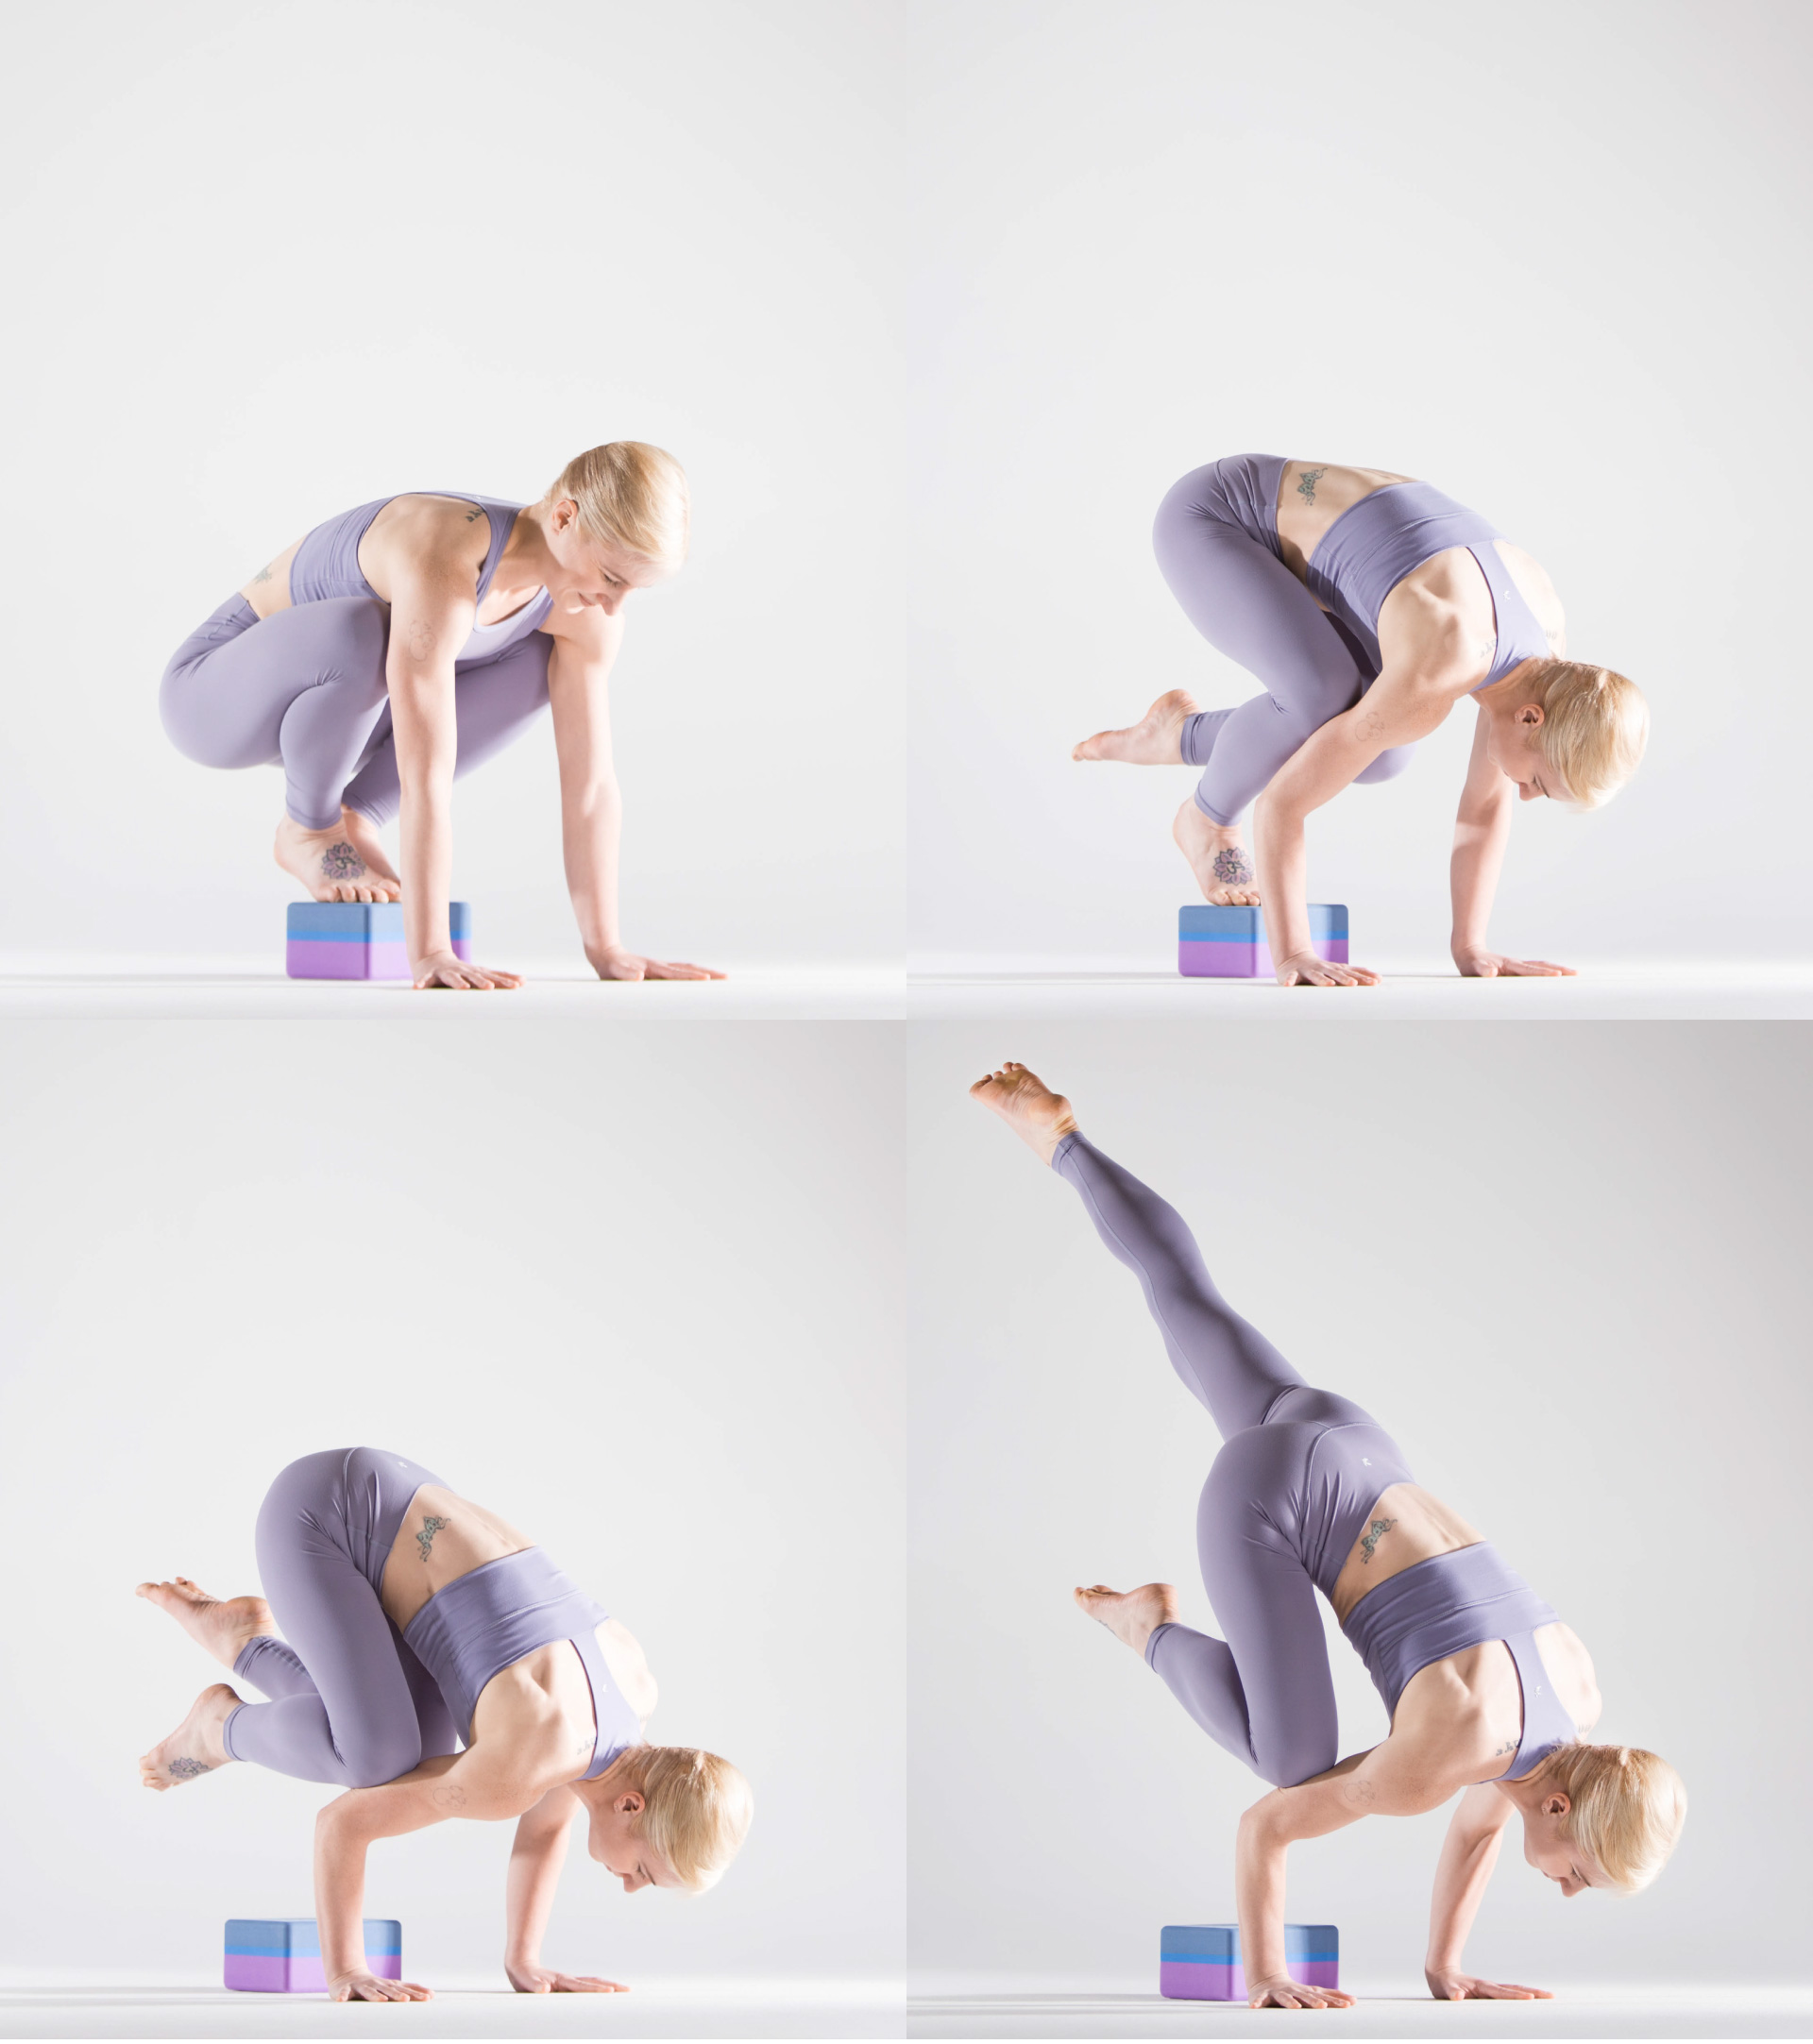 Asana tip sheet #12 - Bakasana (Crow pose) » Blissful Yogini: Yoga Teacher  Resources and Inspiration